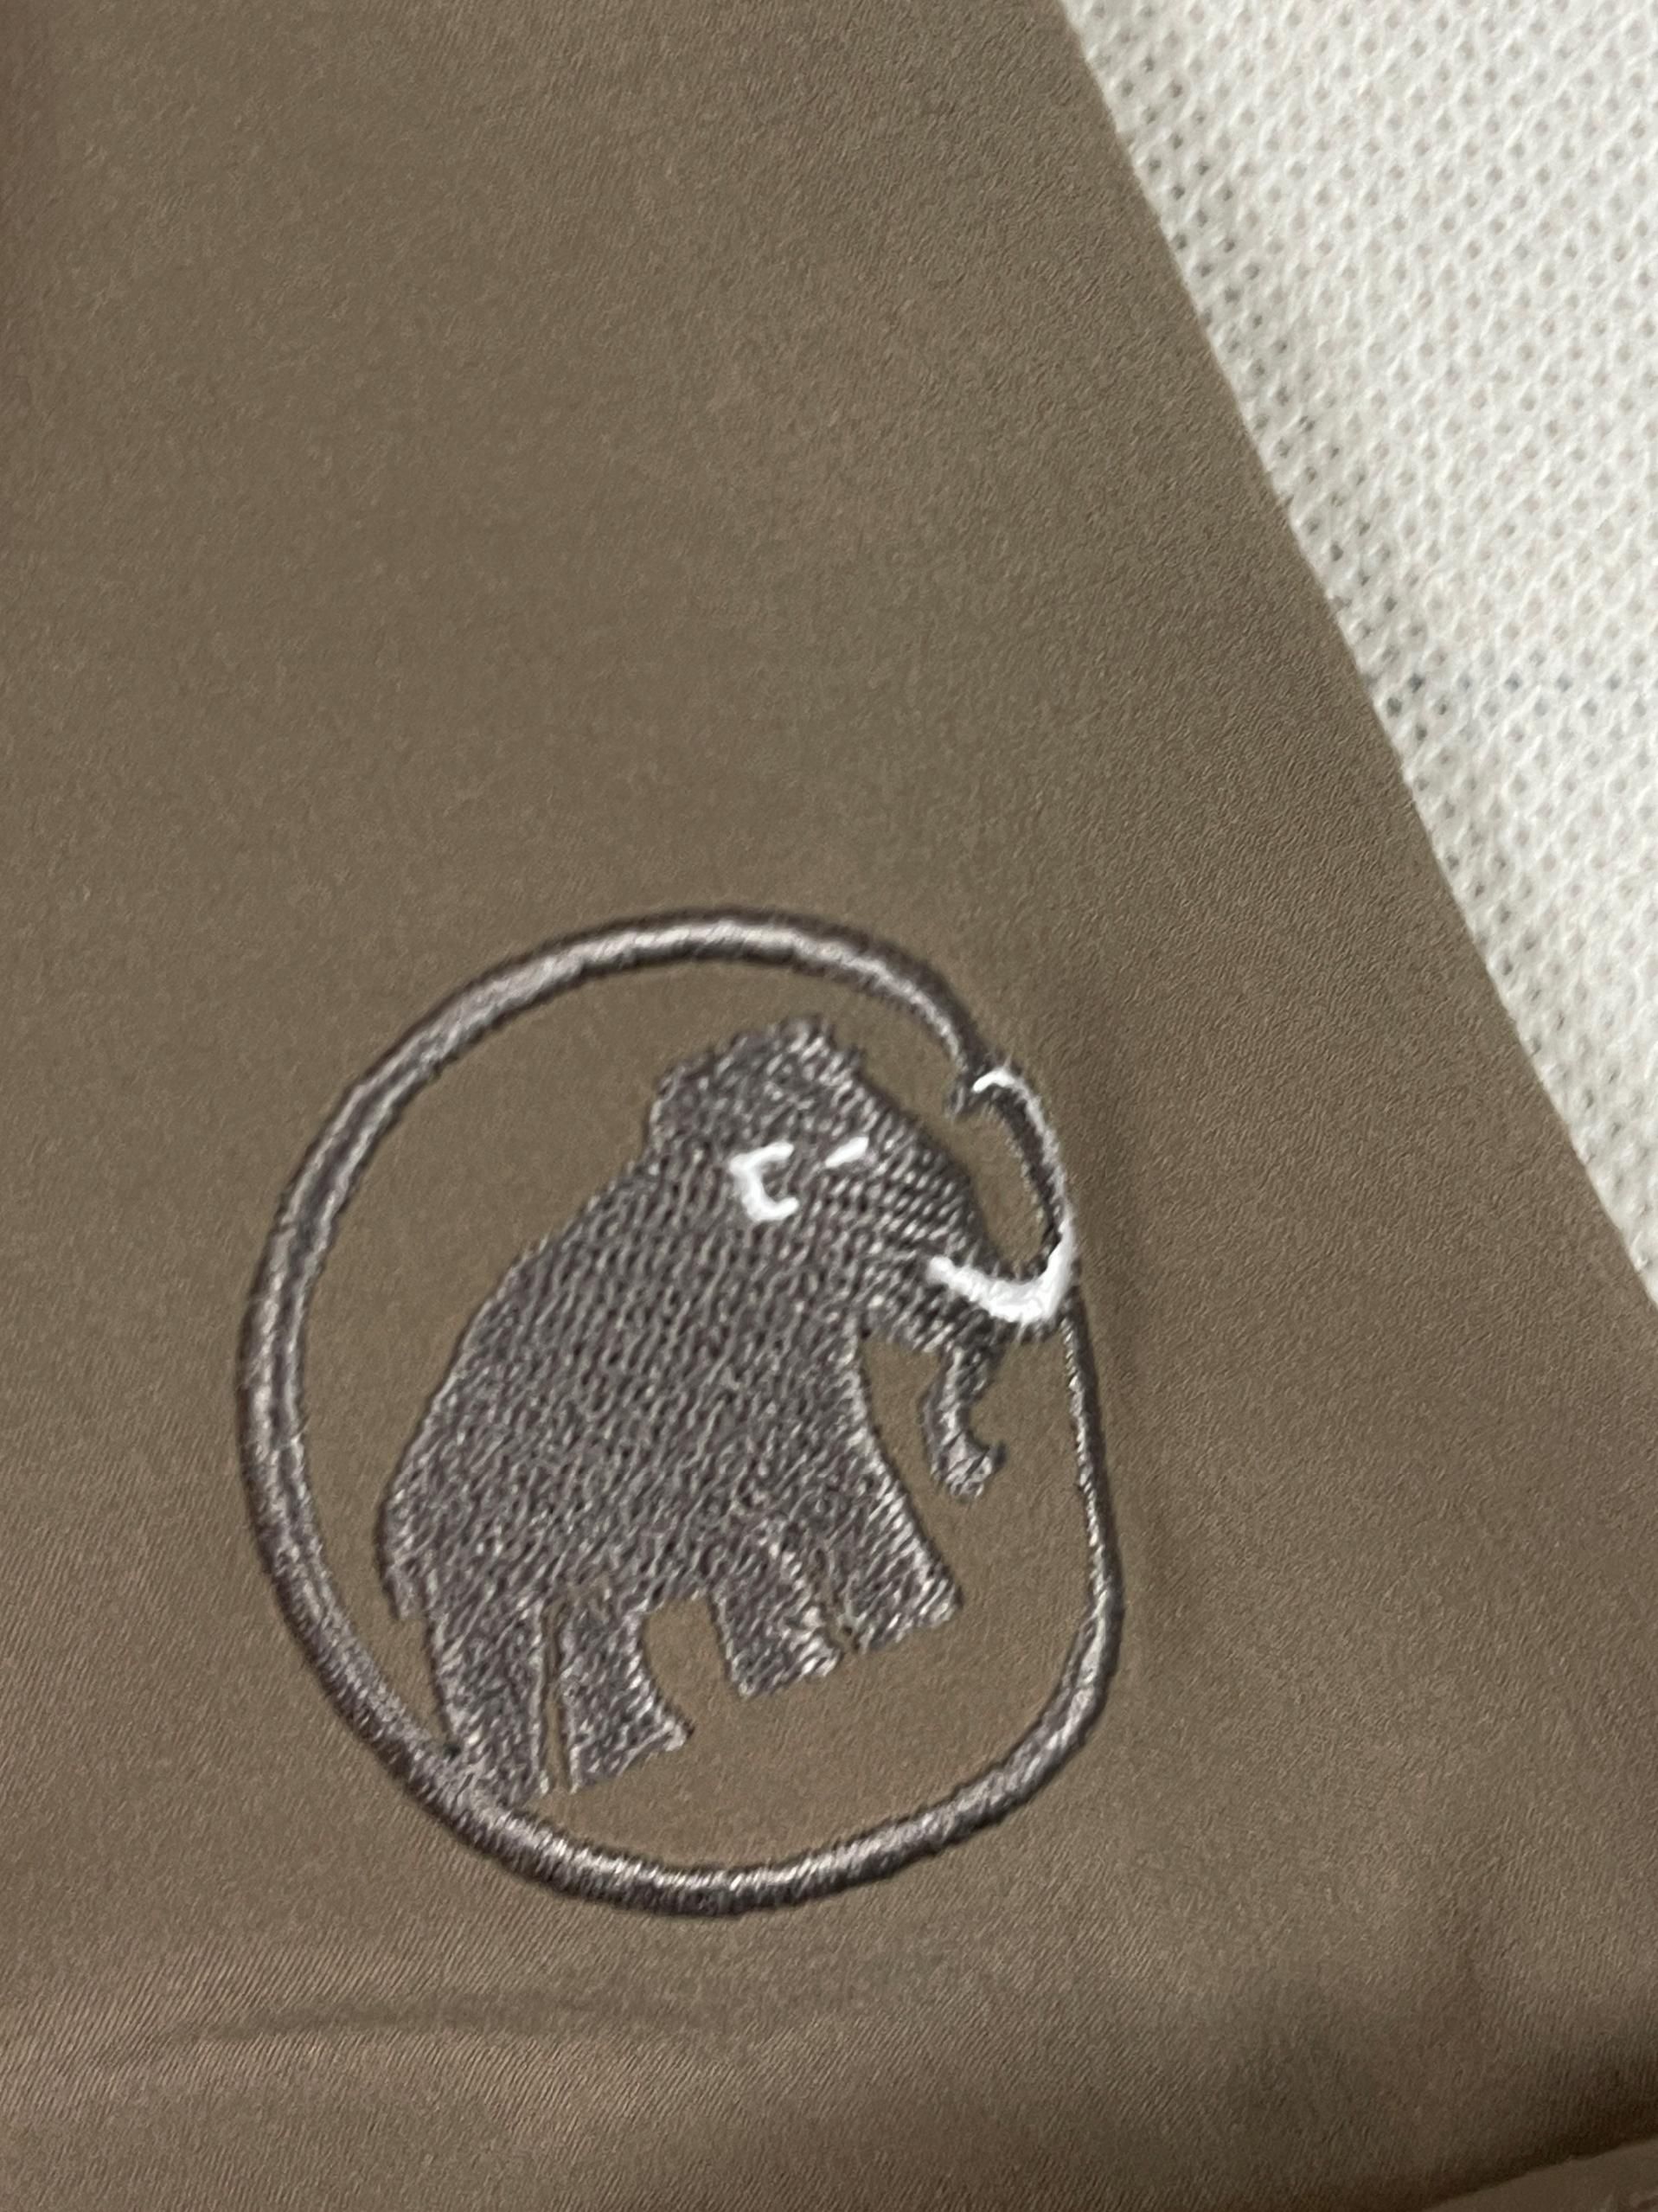 Mammut Kurtka Damska Beżowa SOFTECH Logo Klasyk S M